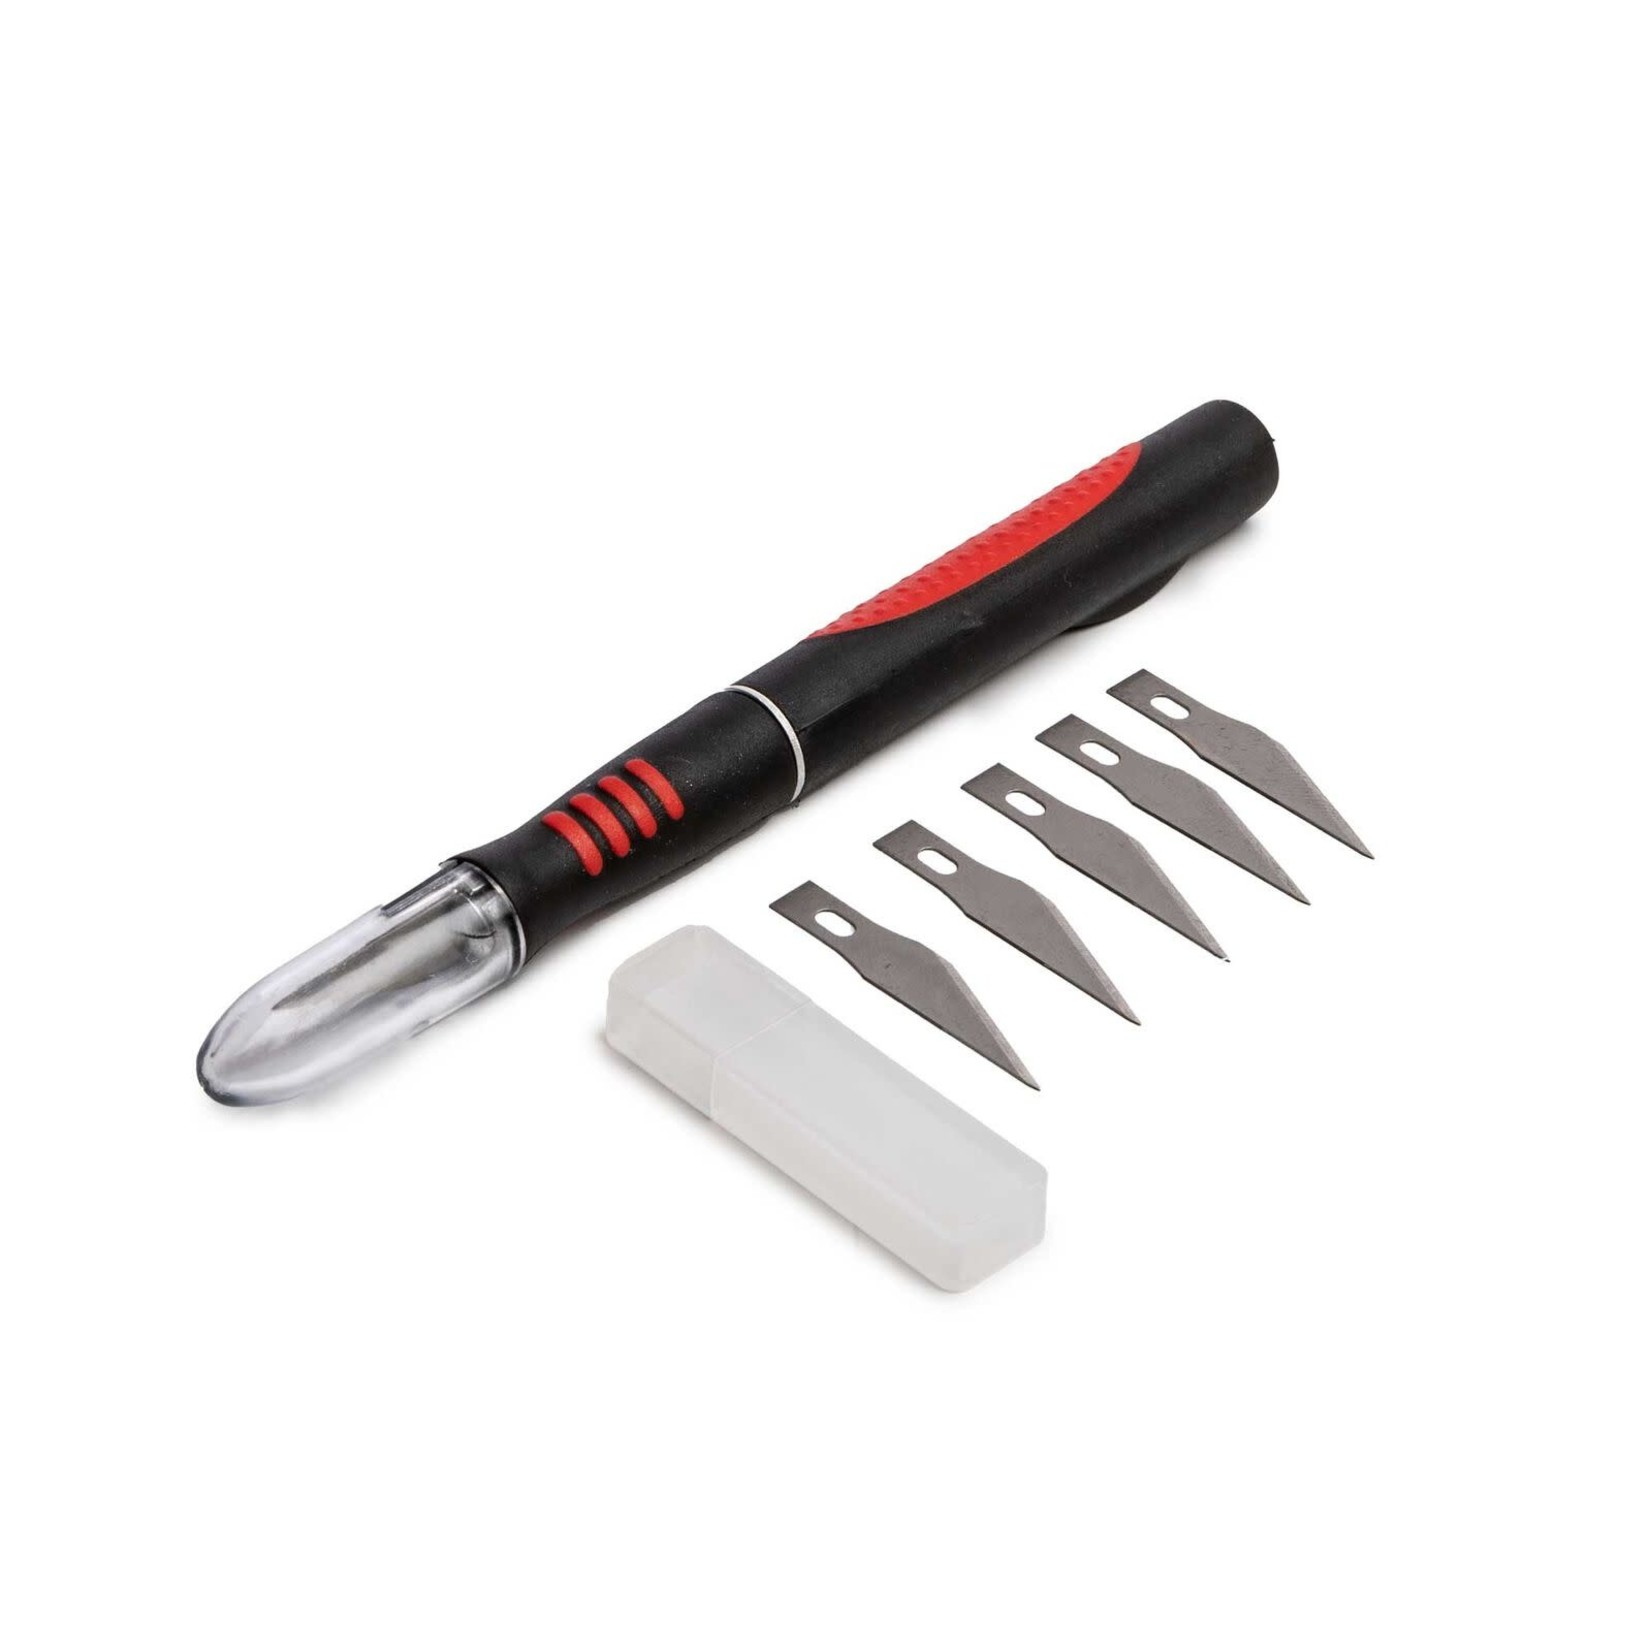 Hobby Essentials Hobby Essentials Premium Soft Handle Knife #1 with Blade #5 #HDXK6900